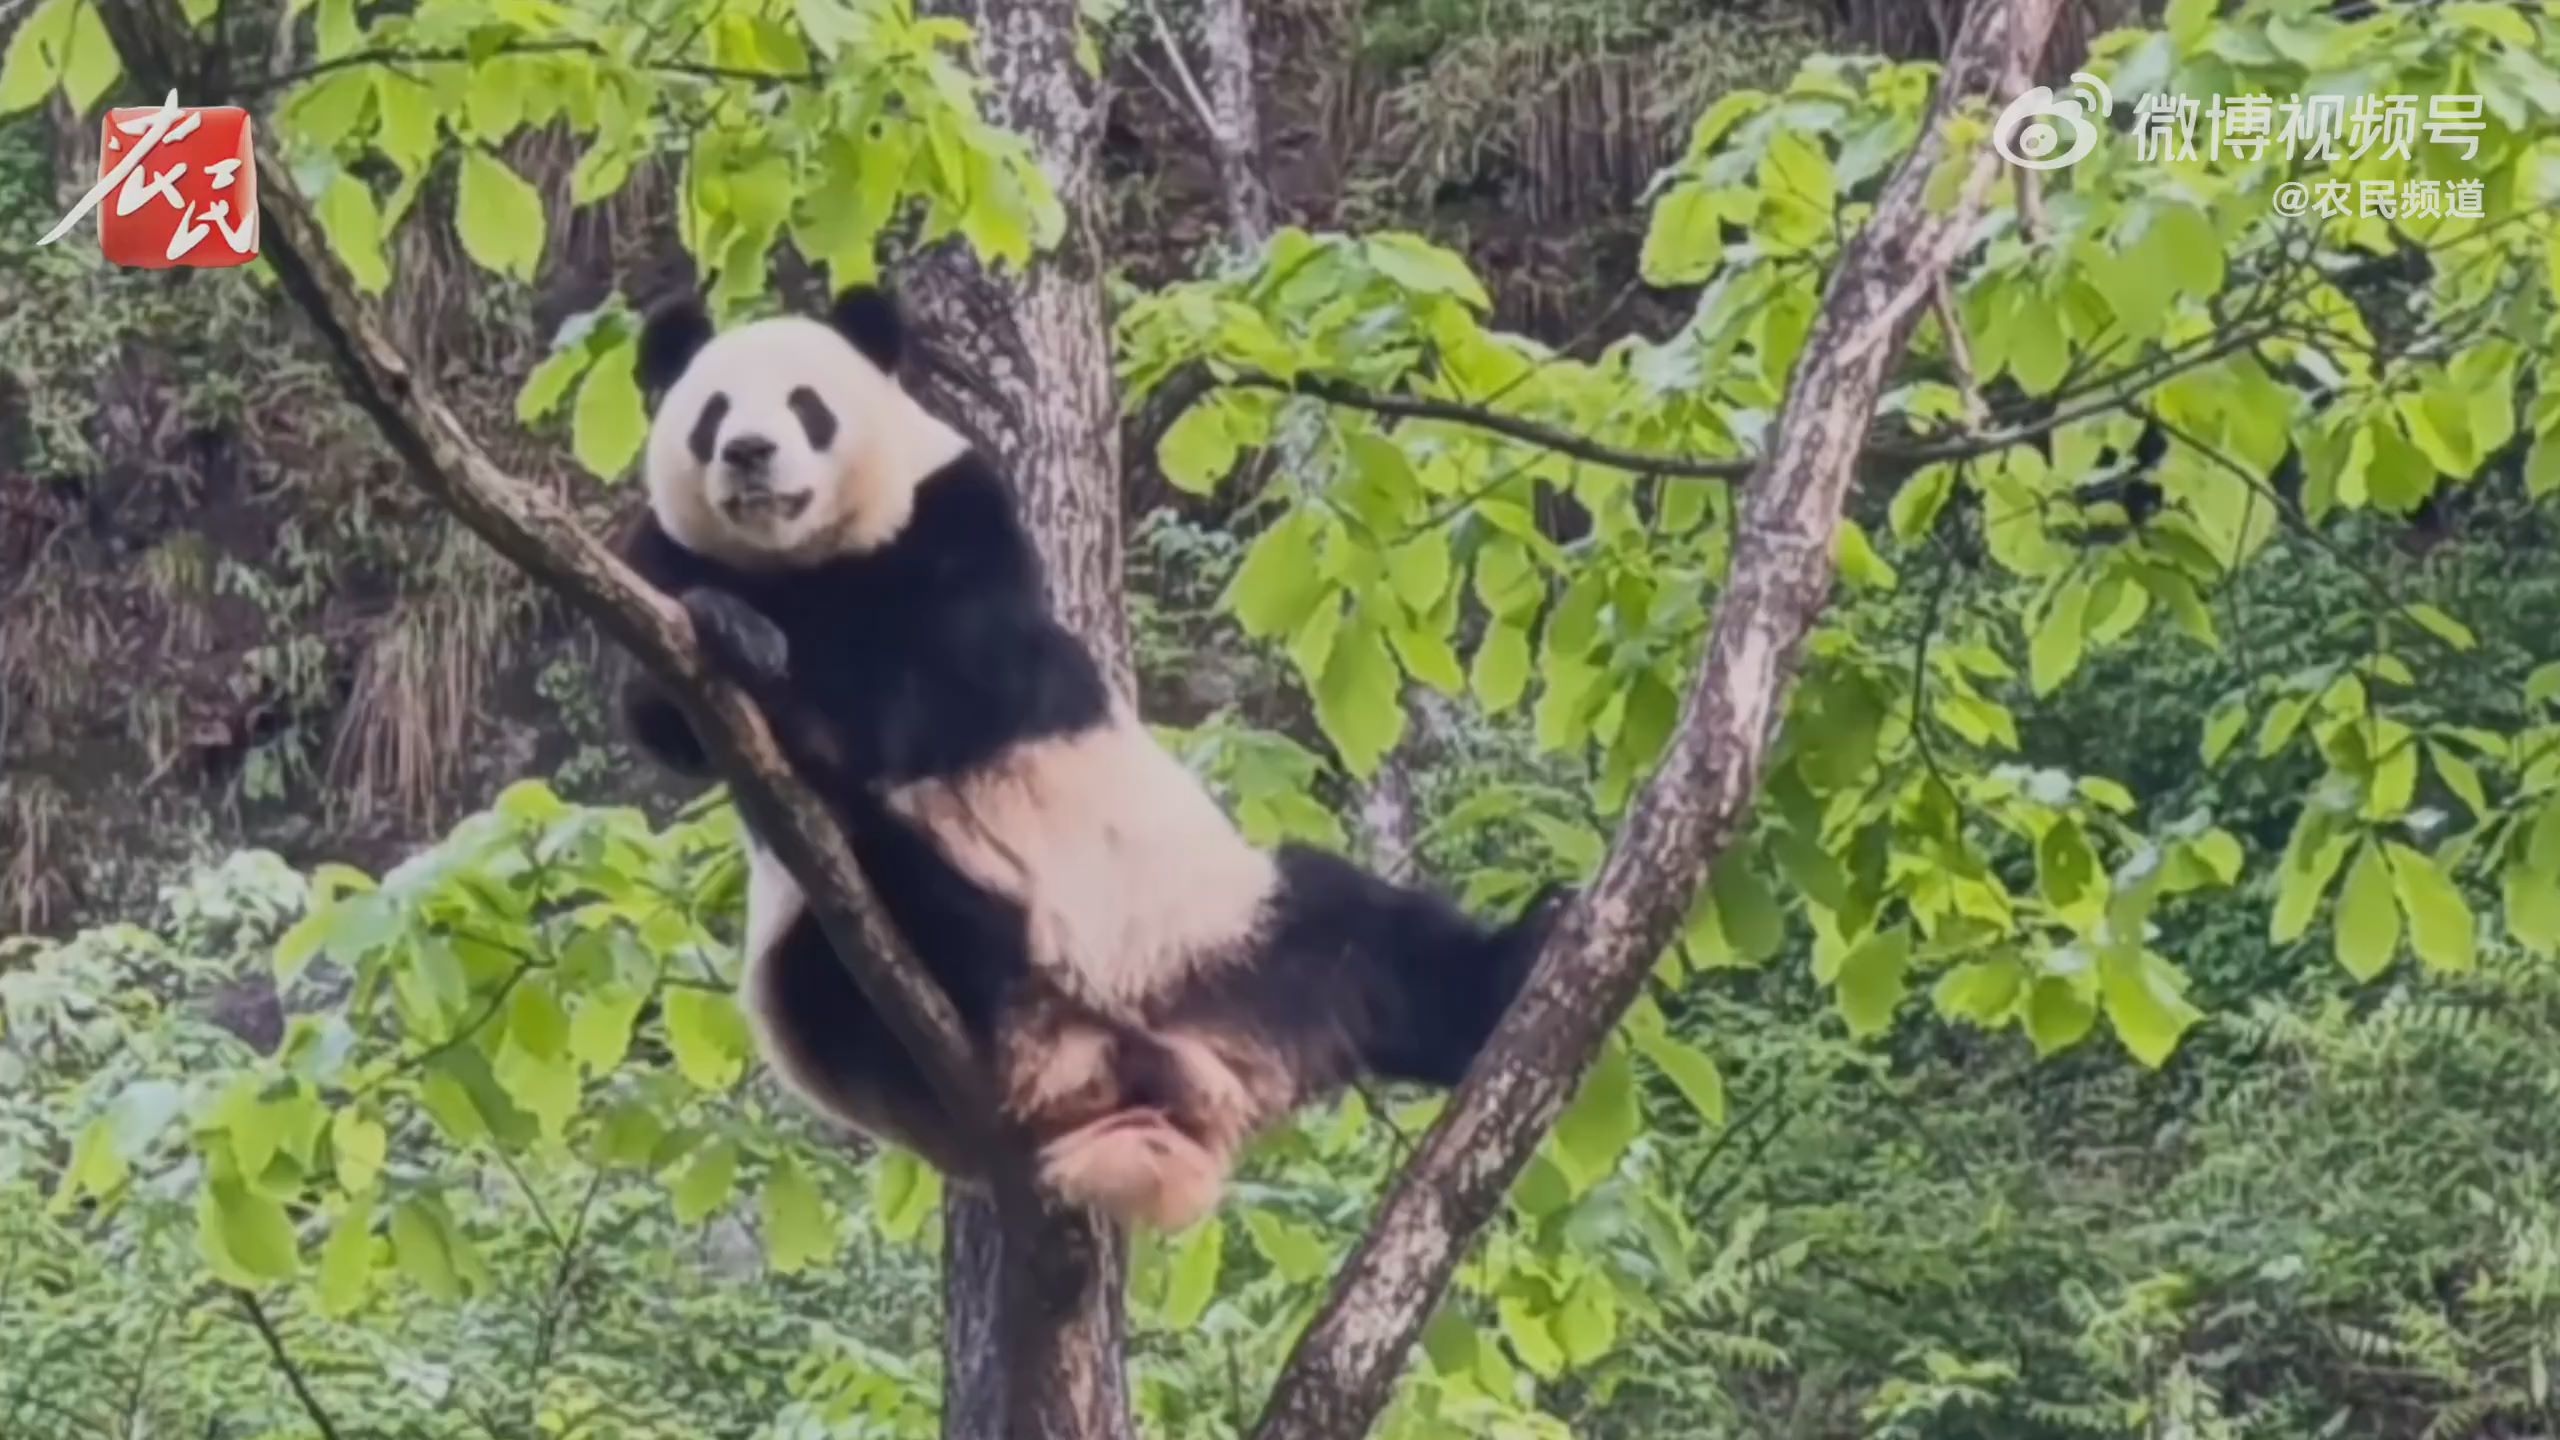  Giant pandas hang on trees and smile